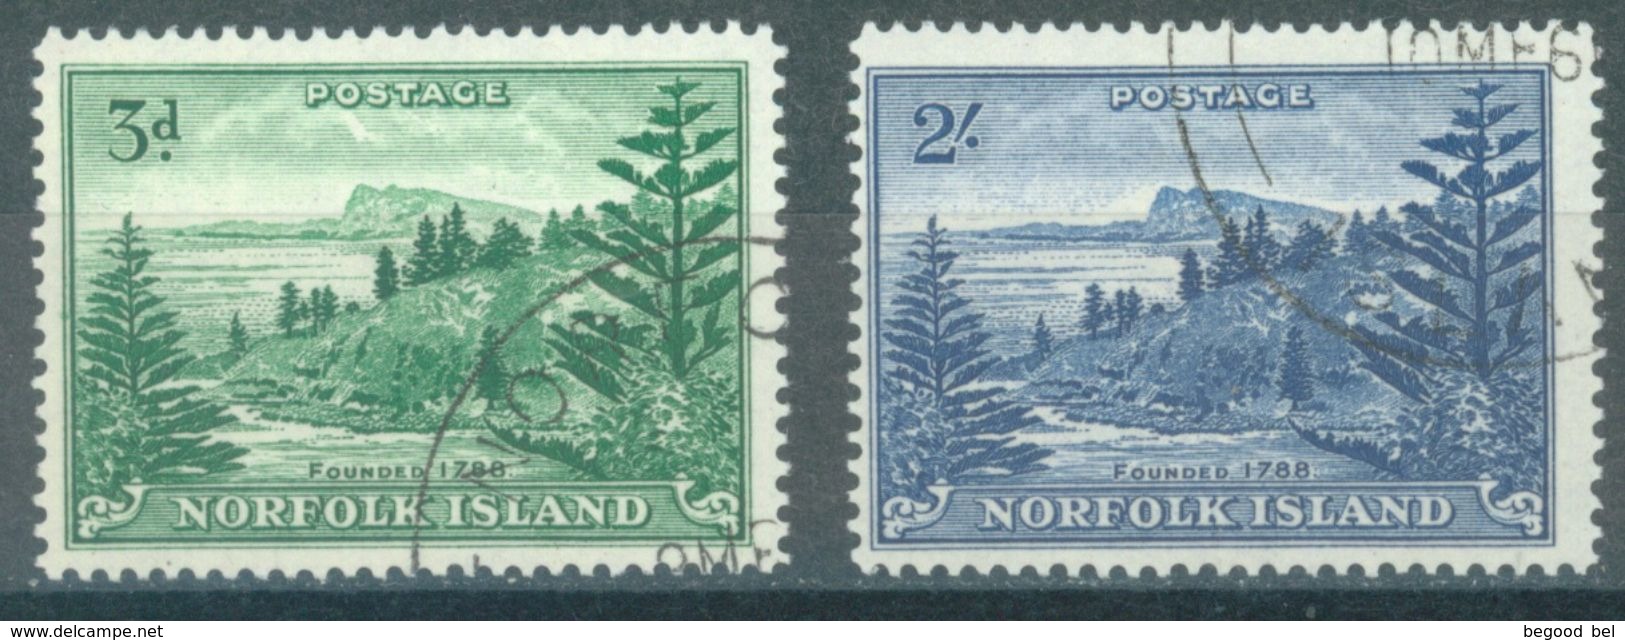 NORFOLK ISLAND - USED/OBLIT. - 1959 - BALL BAY - Yv 23-24 ASC 7 14 - Lot 17510 - Norfolk Island